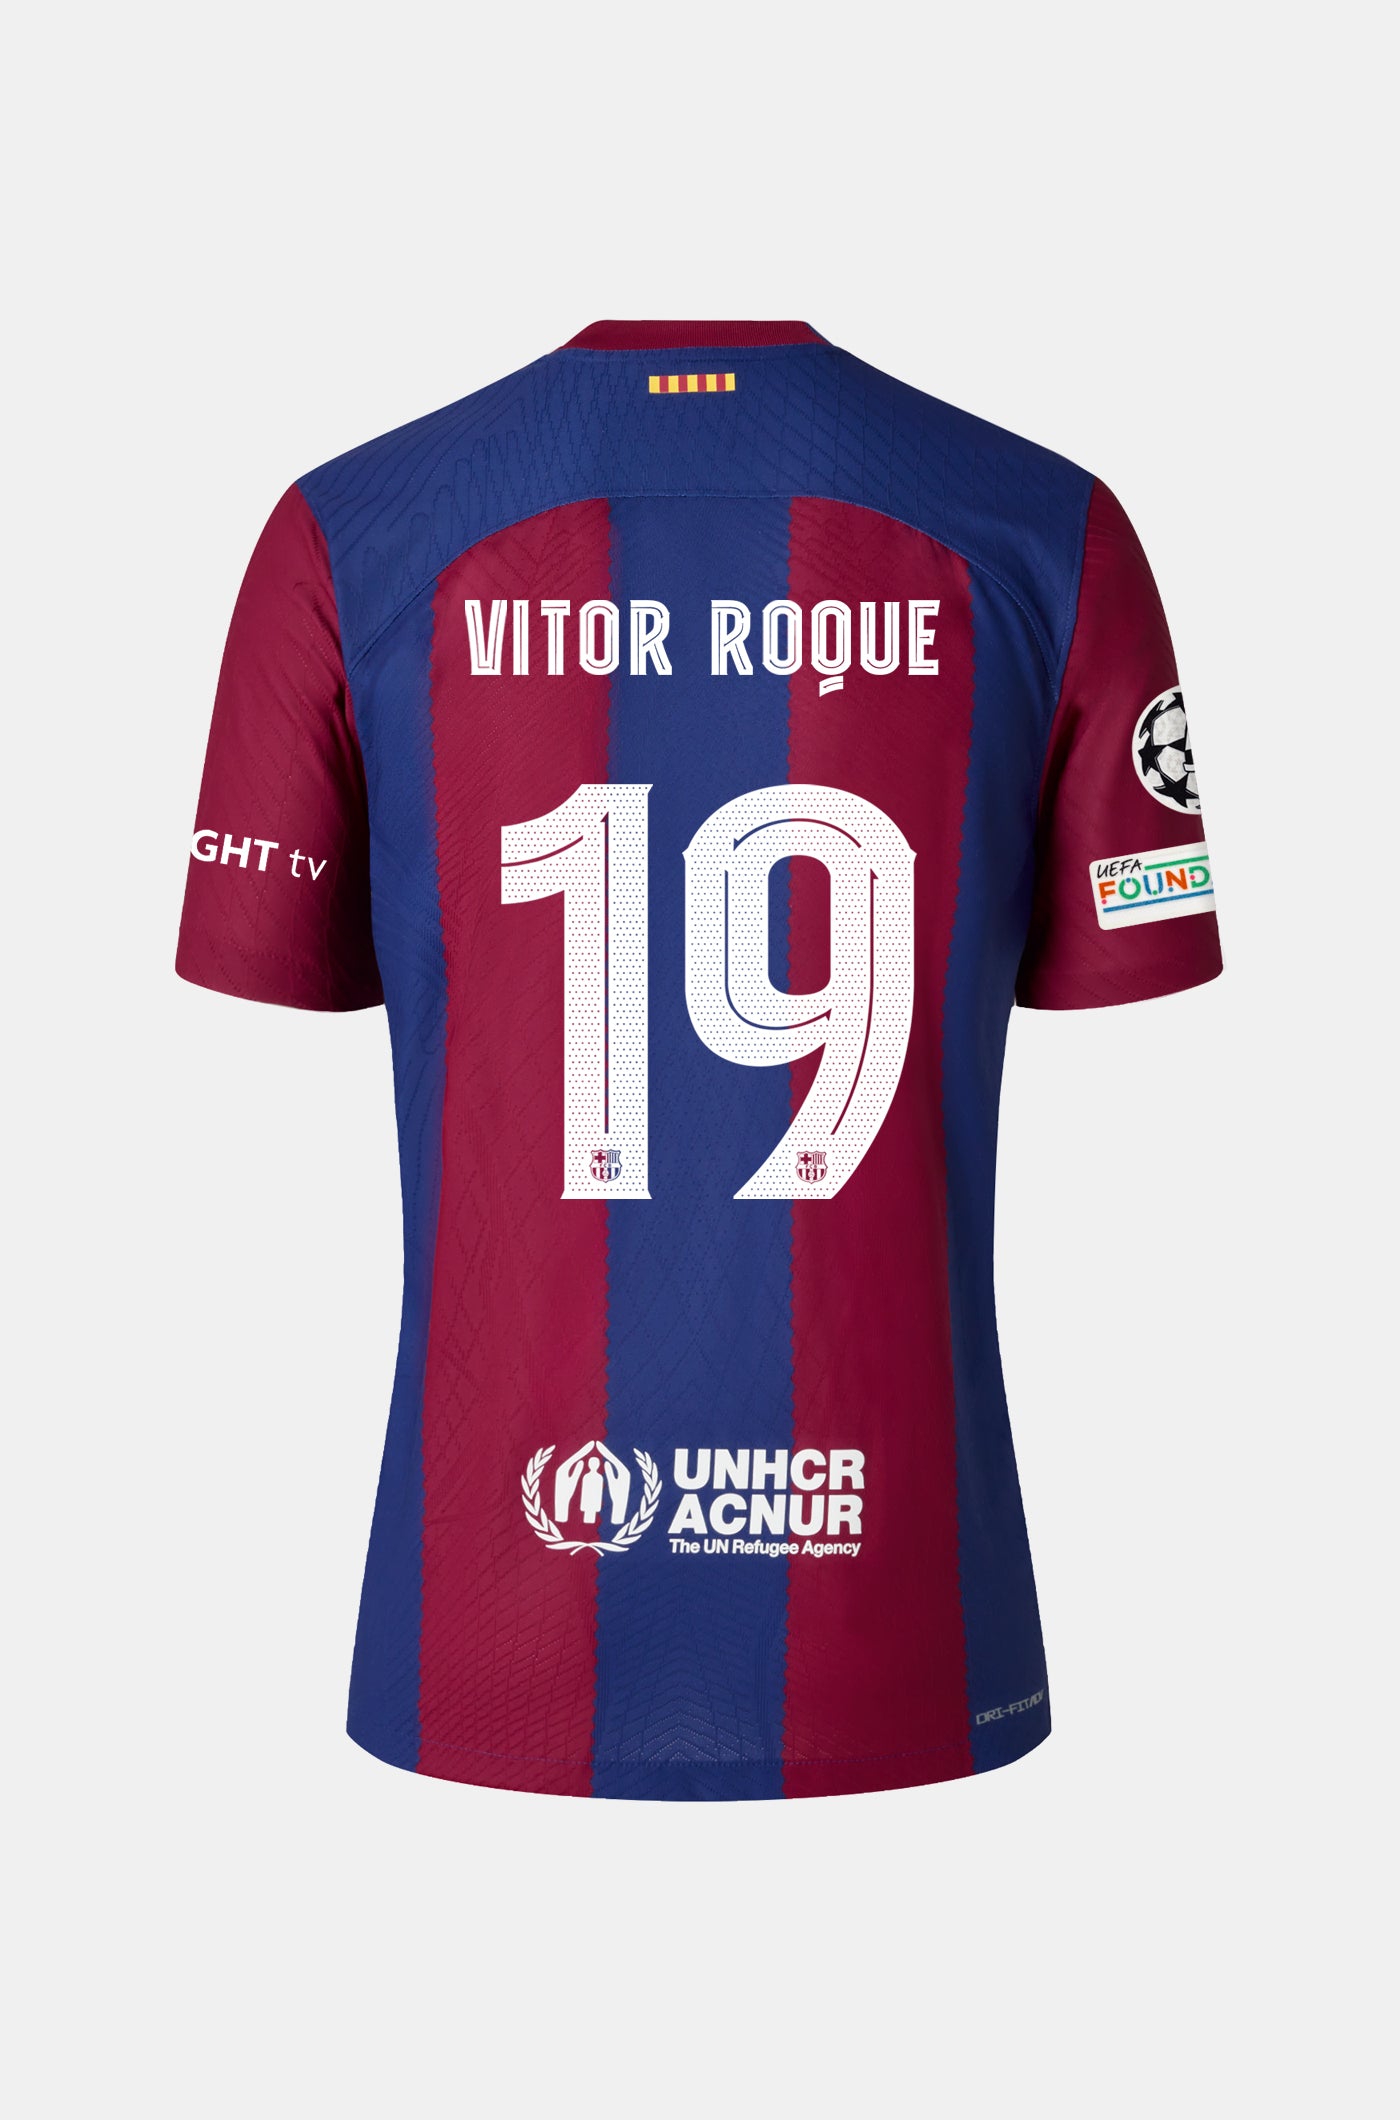 UCL FC Barcelona home shirt 23/24 - Women - VITOR ROQUE